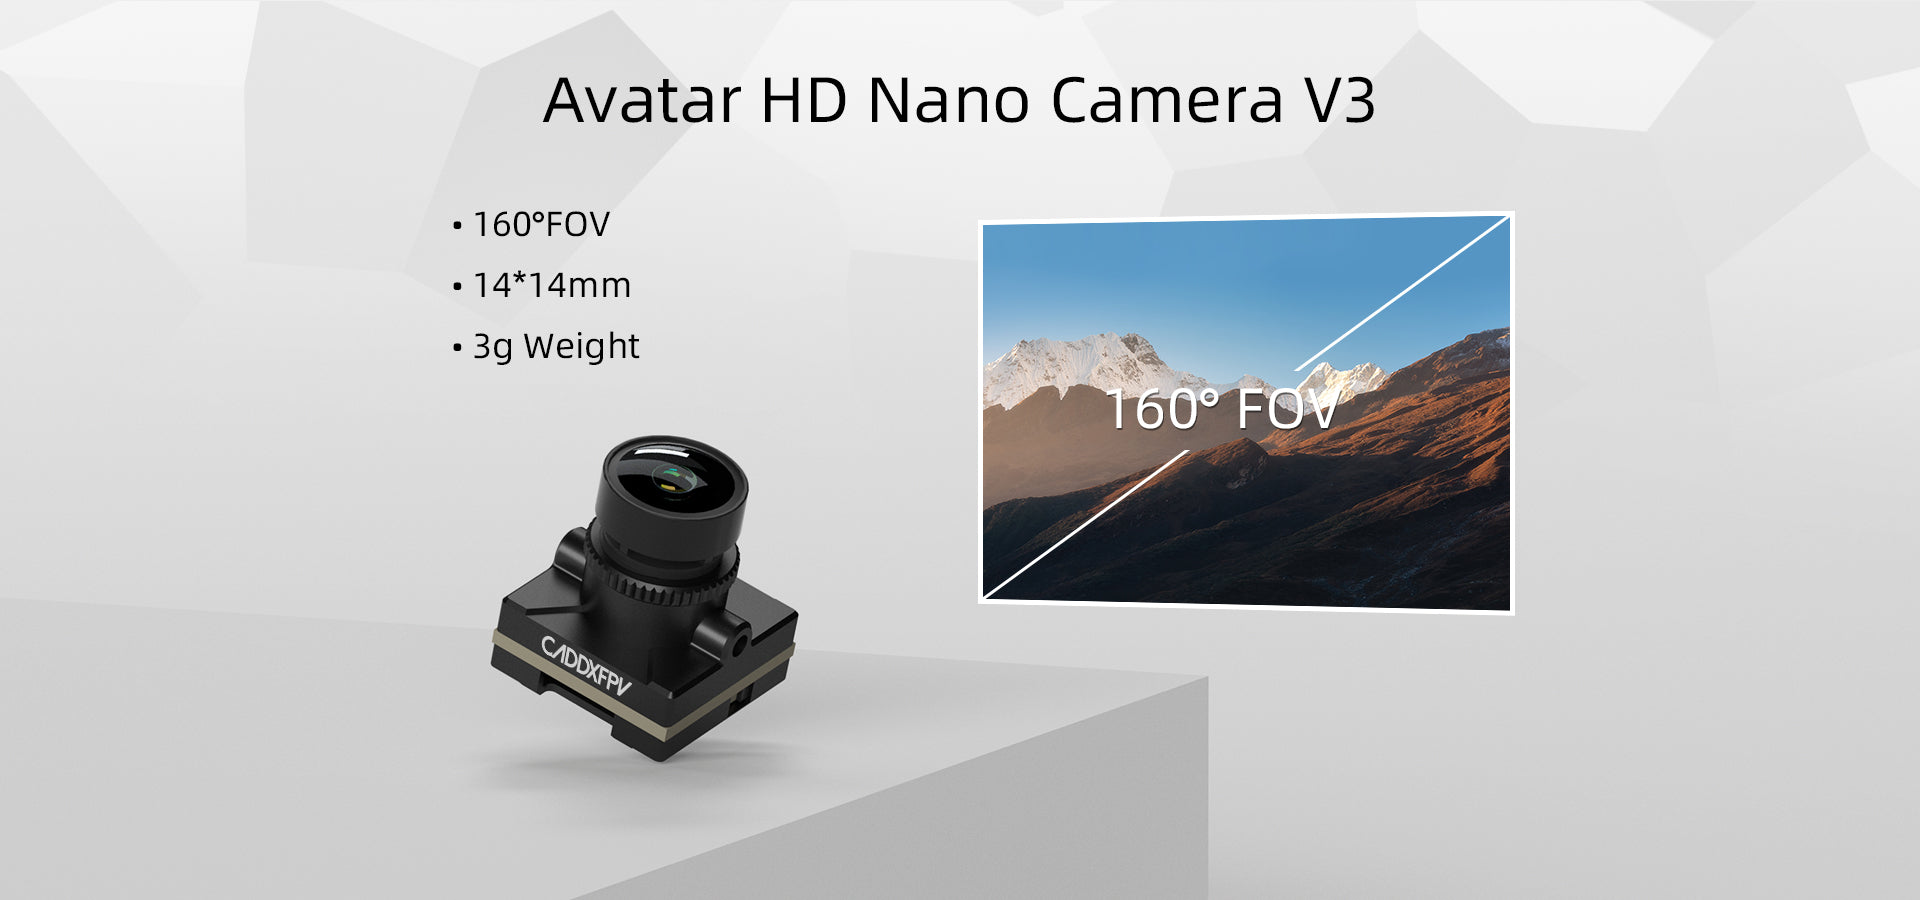 Walksnail Avatar HD Nano Kit V3, Avatar HD Nano Camera V3 160PFOV 14*14mm 3g Weight T